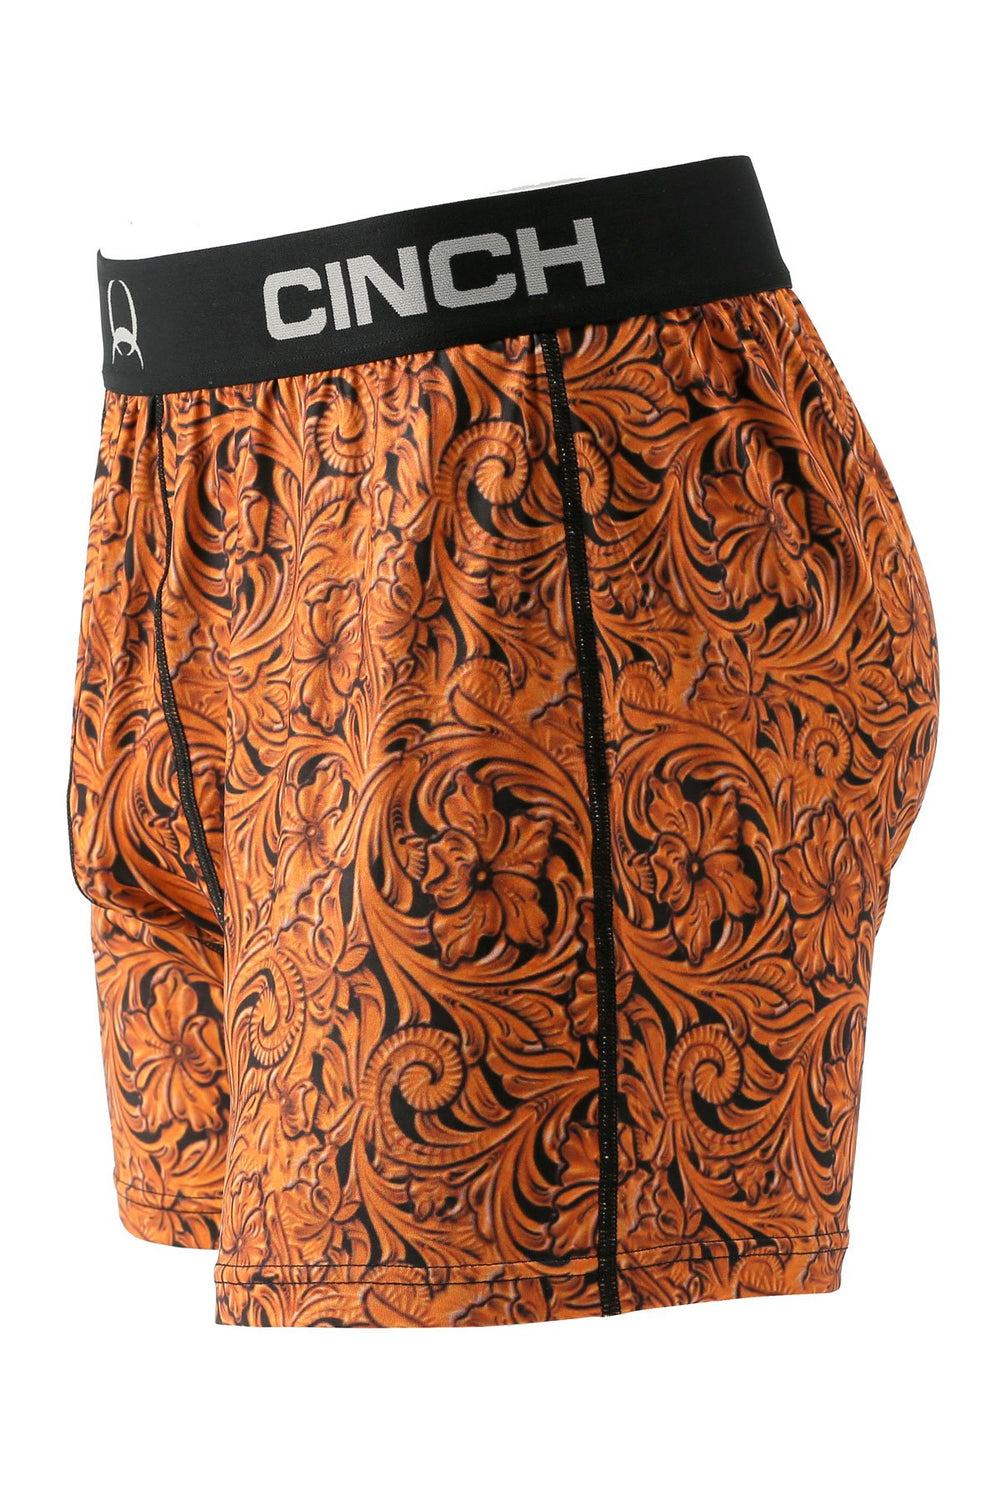 Cinch - Mens 9" Boxer Briefs Leather